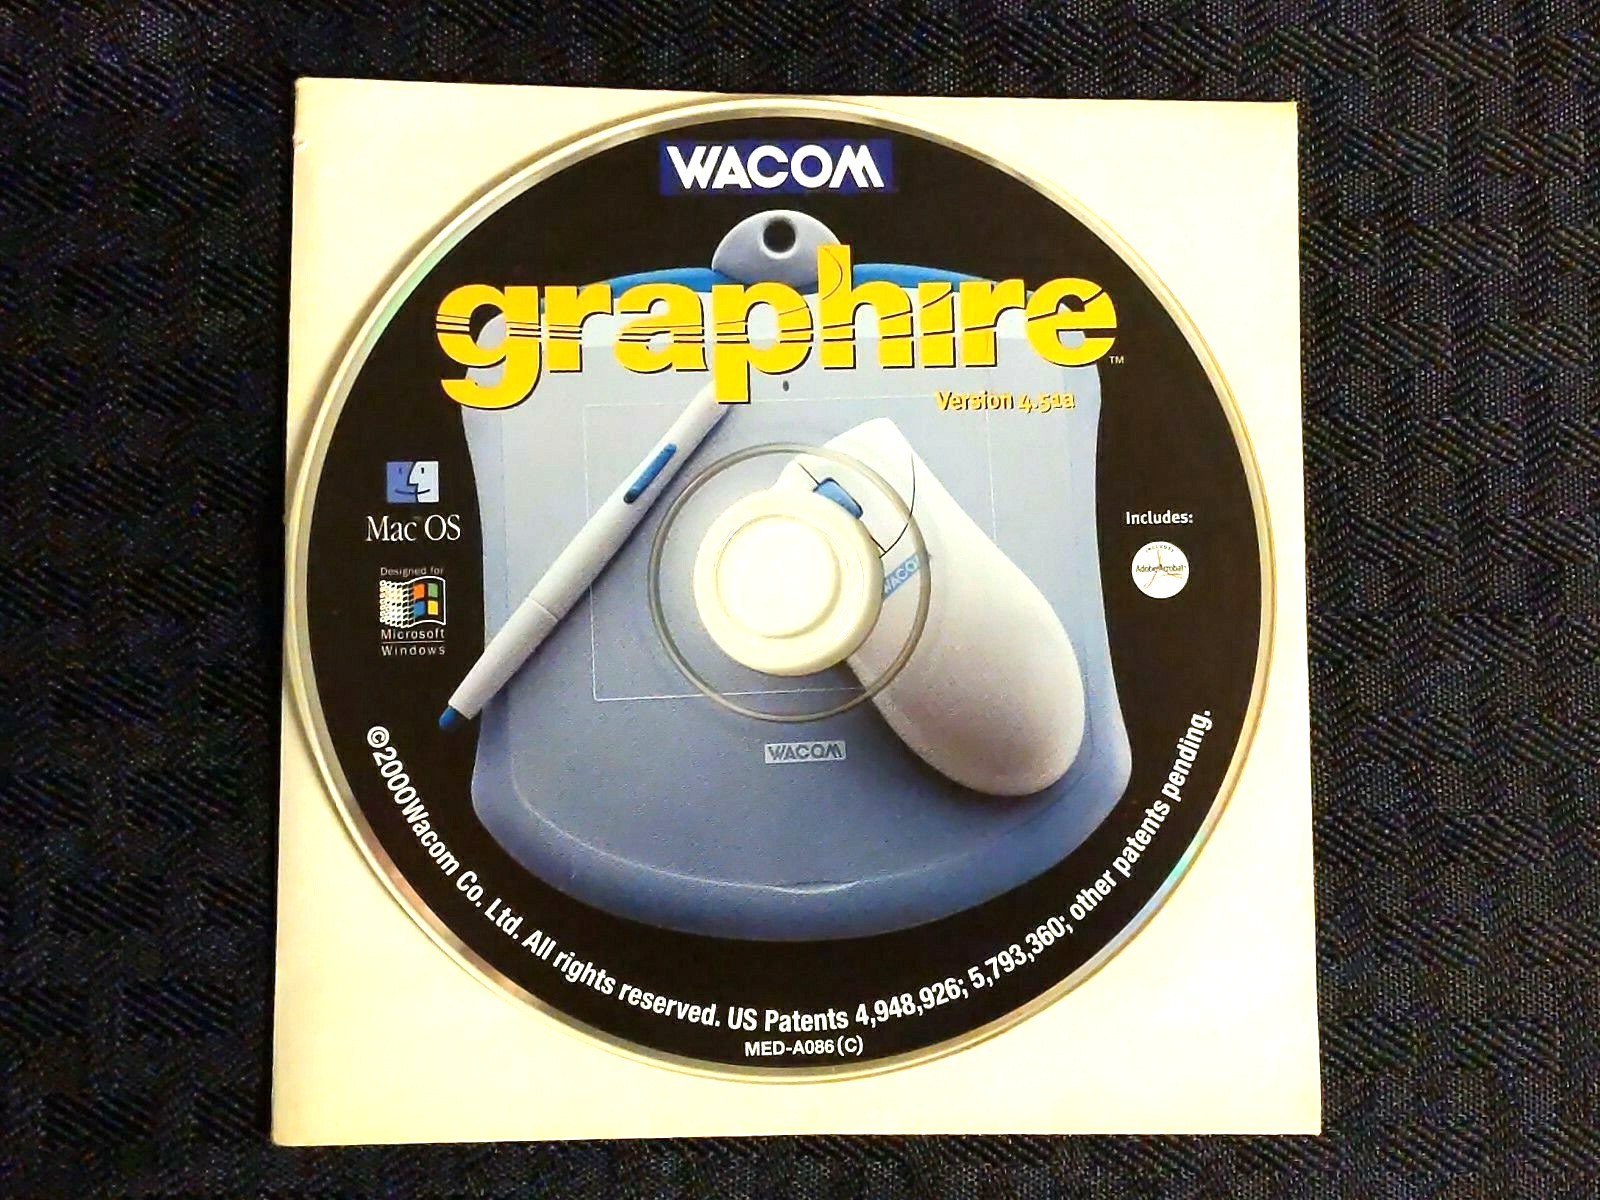 Rare Vintage Wacom Graphire Version 4.51a Includes Adobe Acrobat CD